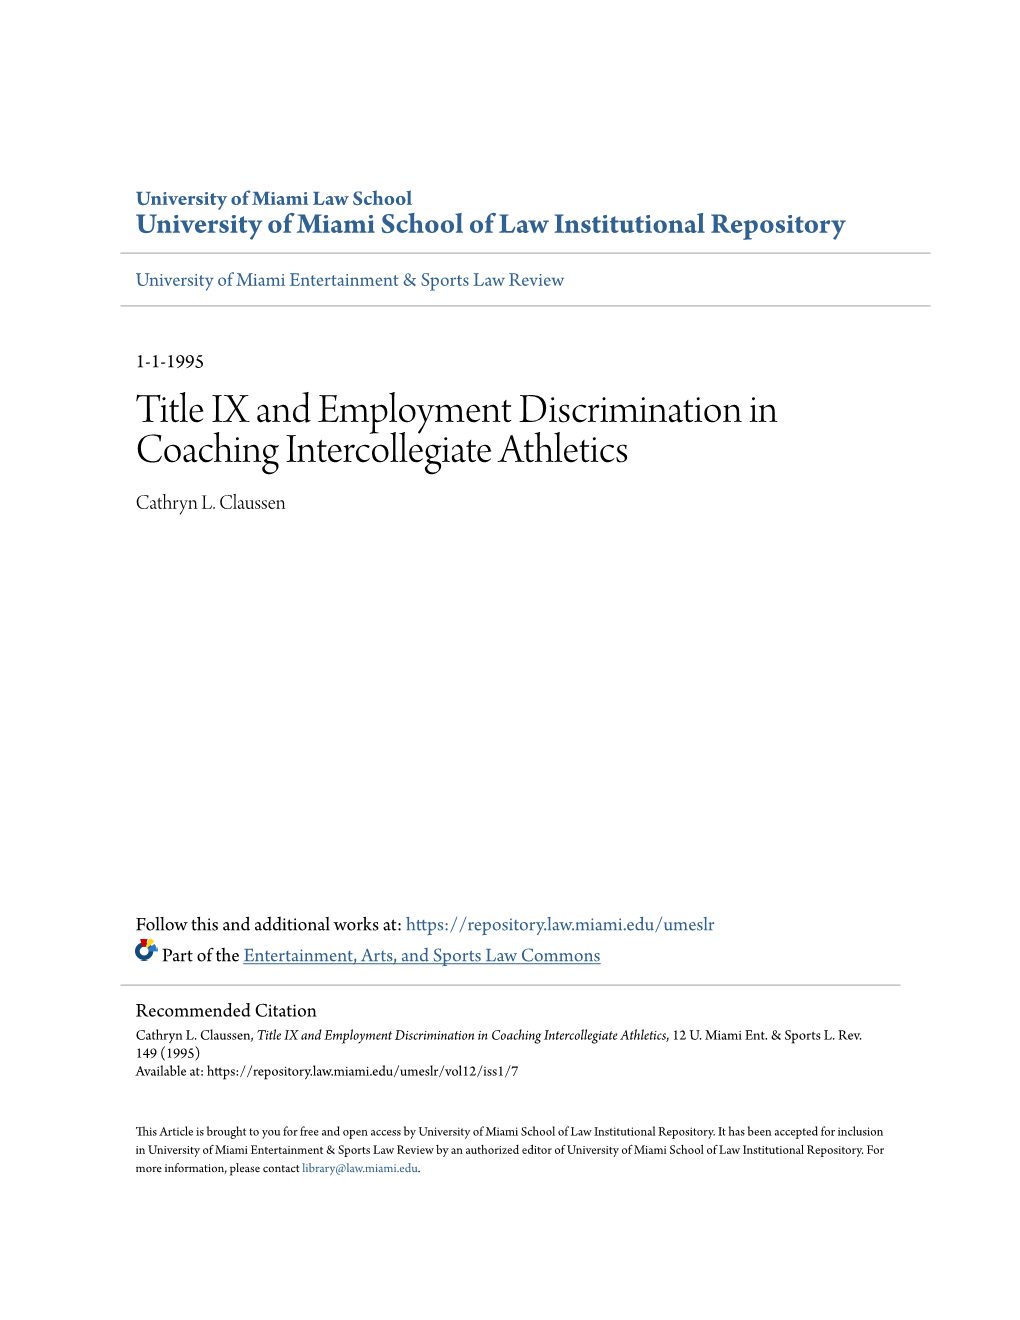 Title IX and Employment Discrimination in Coaching Intercollegiate Athletics Cathryn L